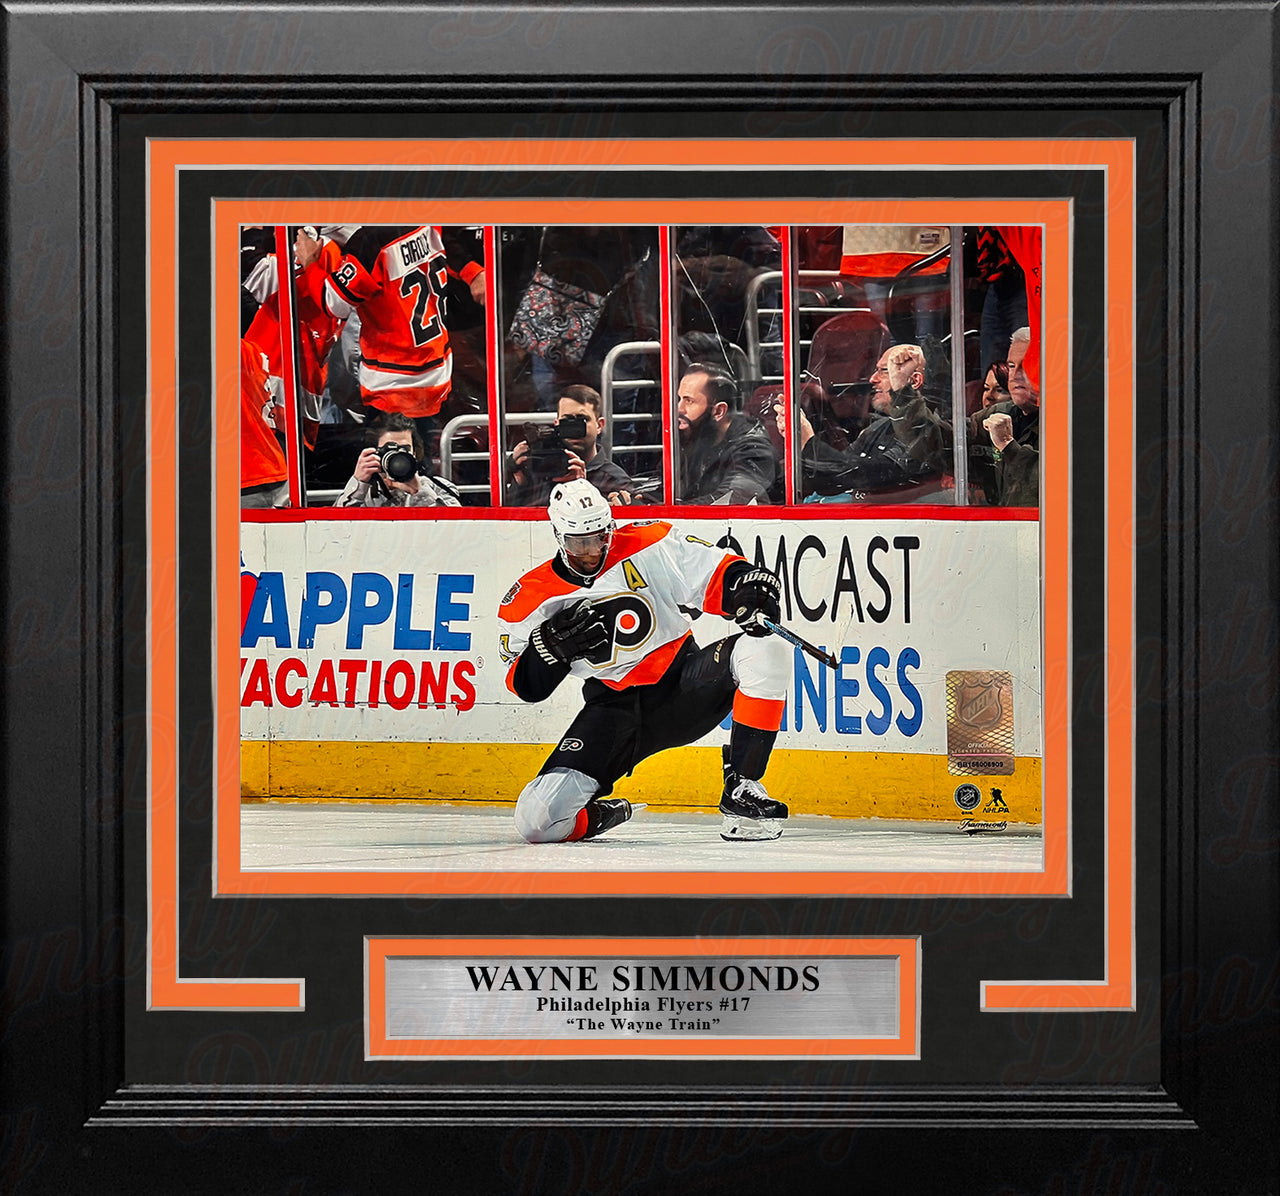 Wayne Simmonds Fist Pump Philadelphia Flyers 8" x 10" Framed Hockey Photo